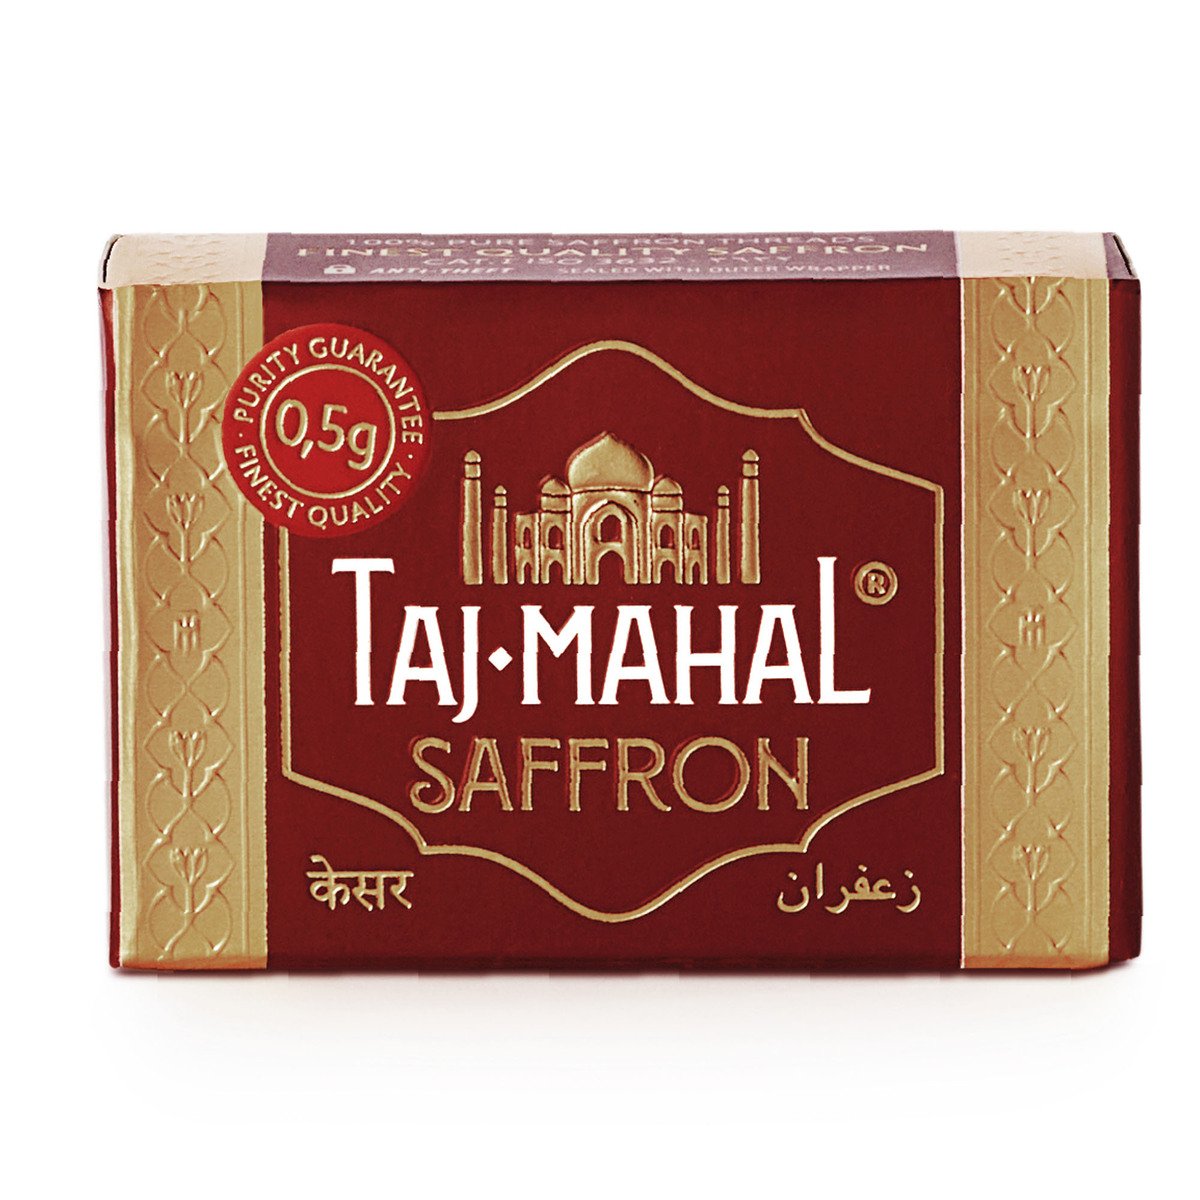 Taj Mahal Saffron 0.5 g